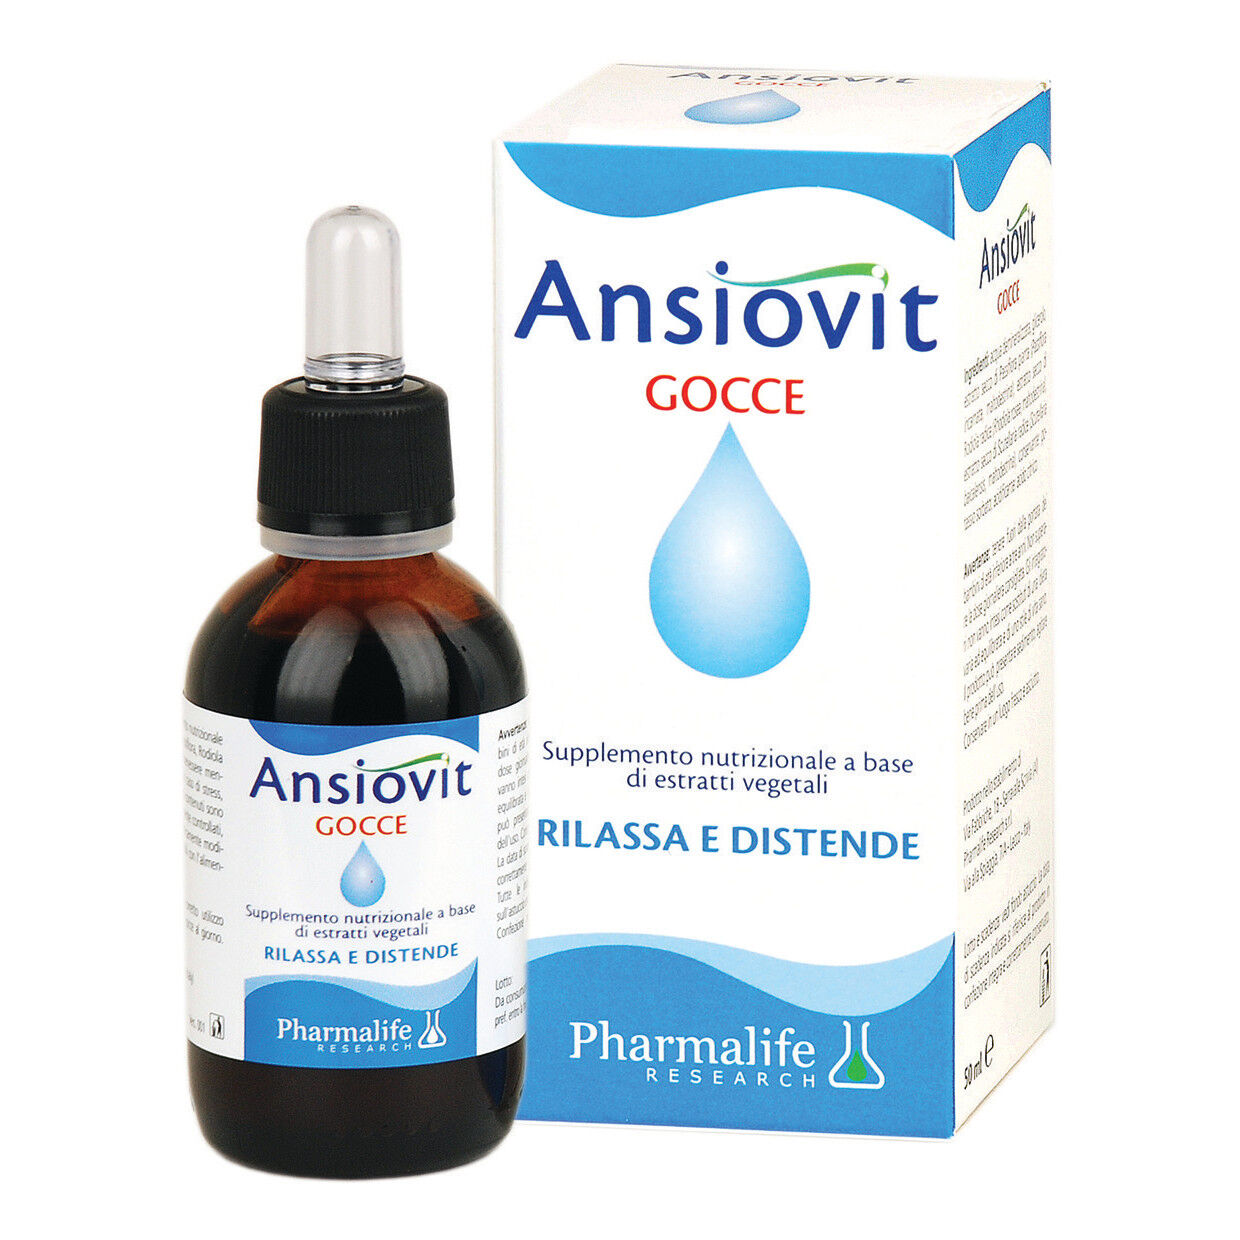 Pharmalife Research Srl Ansiovit Gocce 50ml